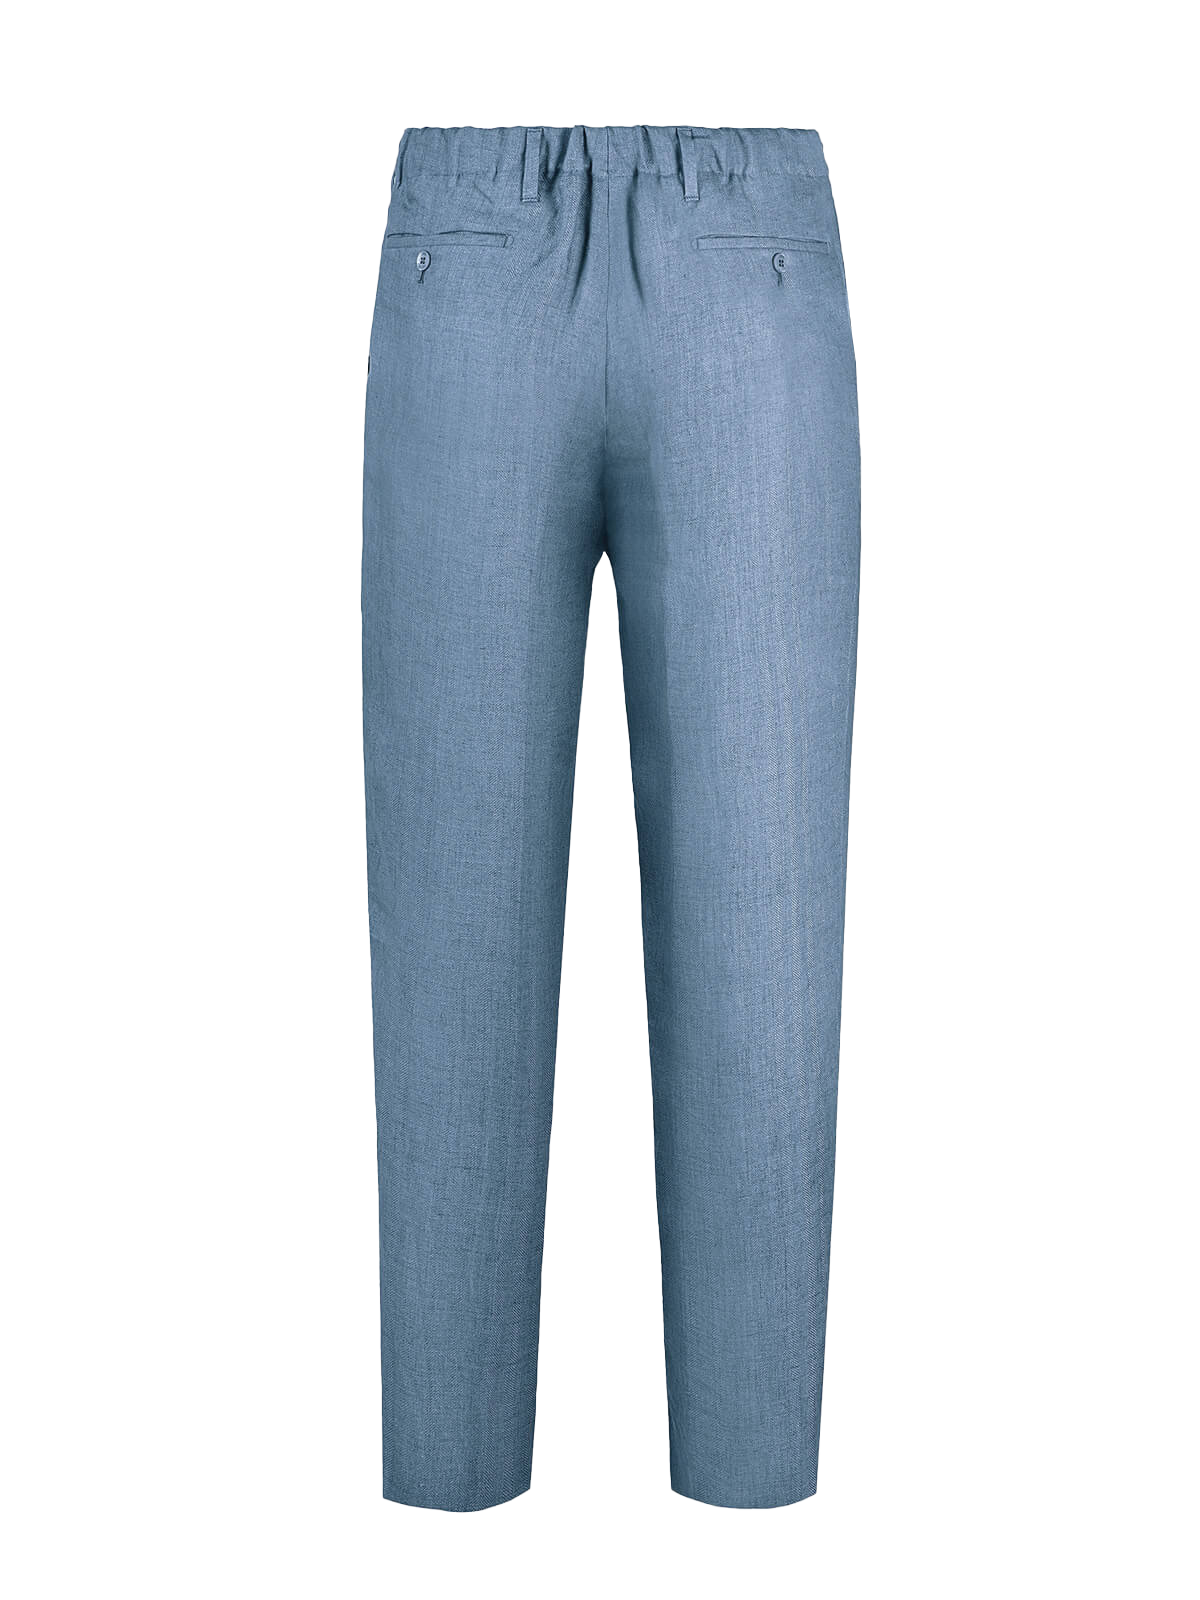 Pantalone Positano 100% capri for Man linen jeans trouser  back